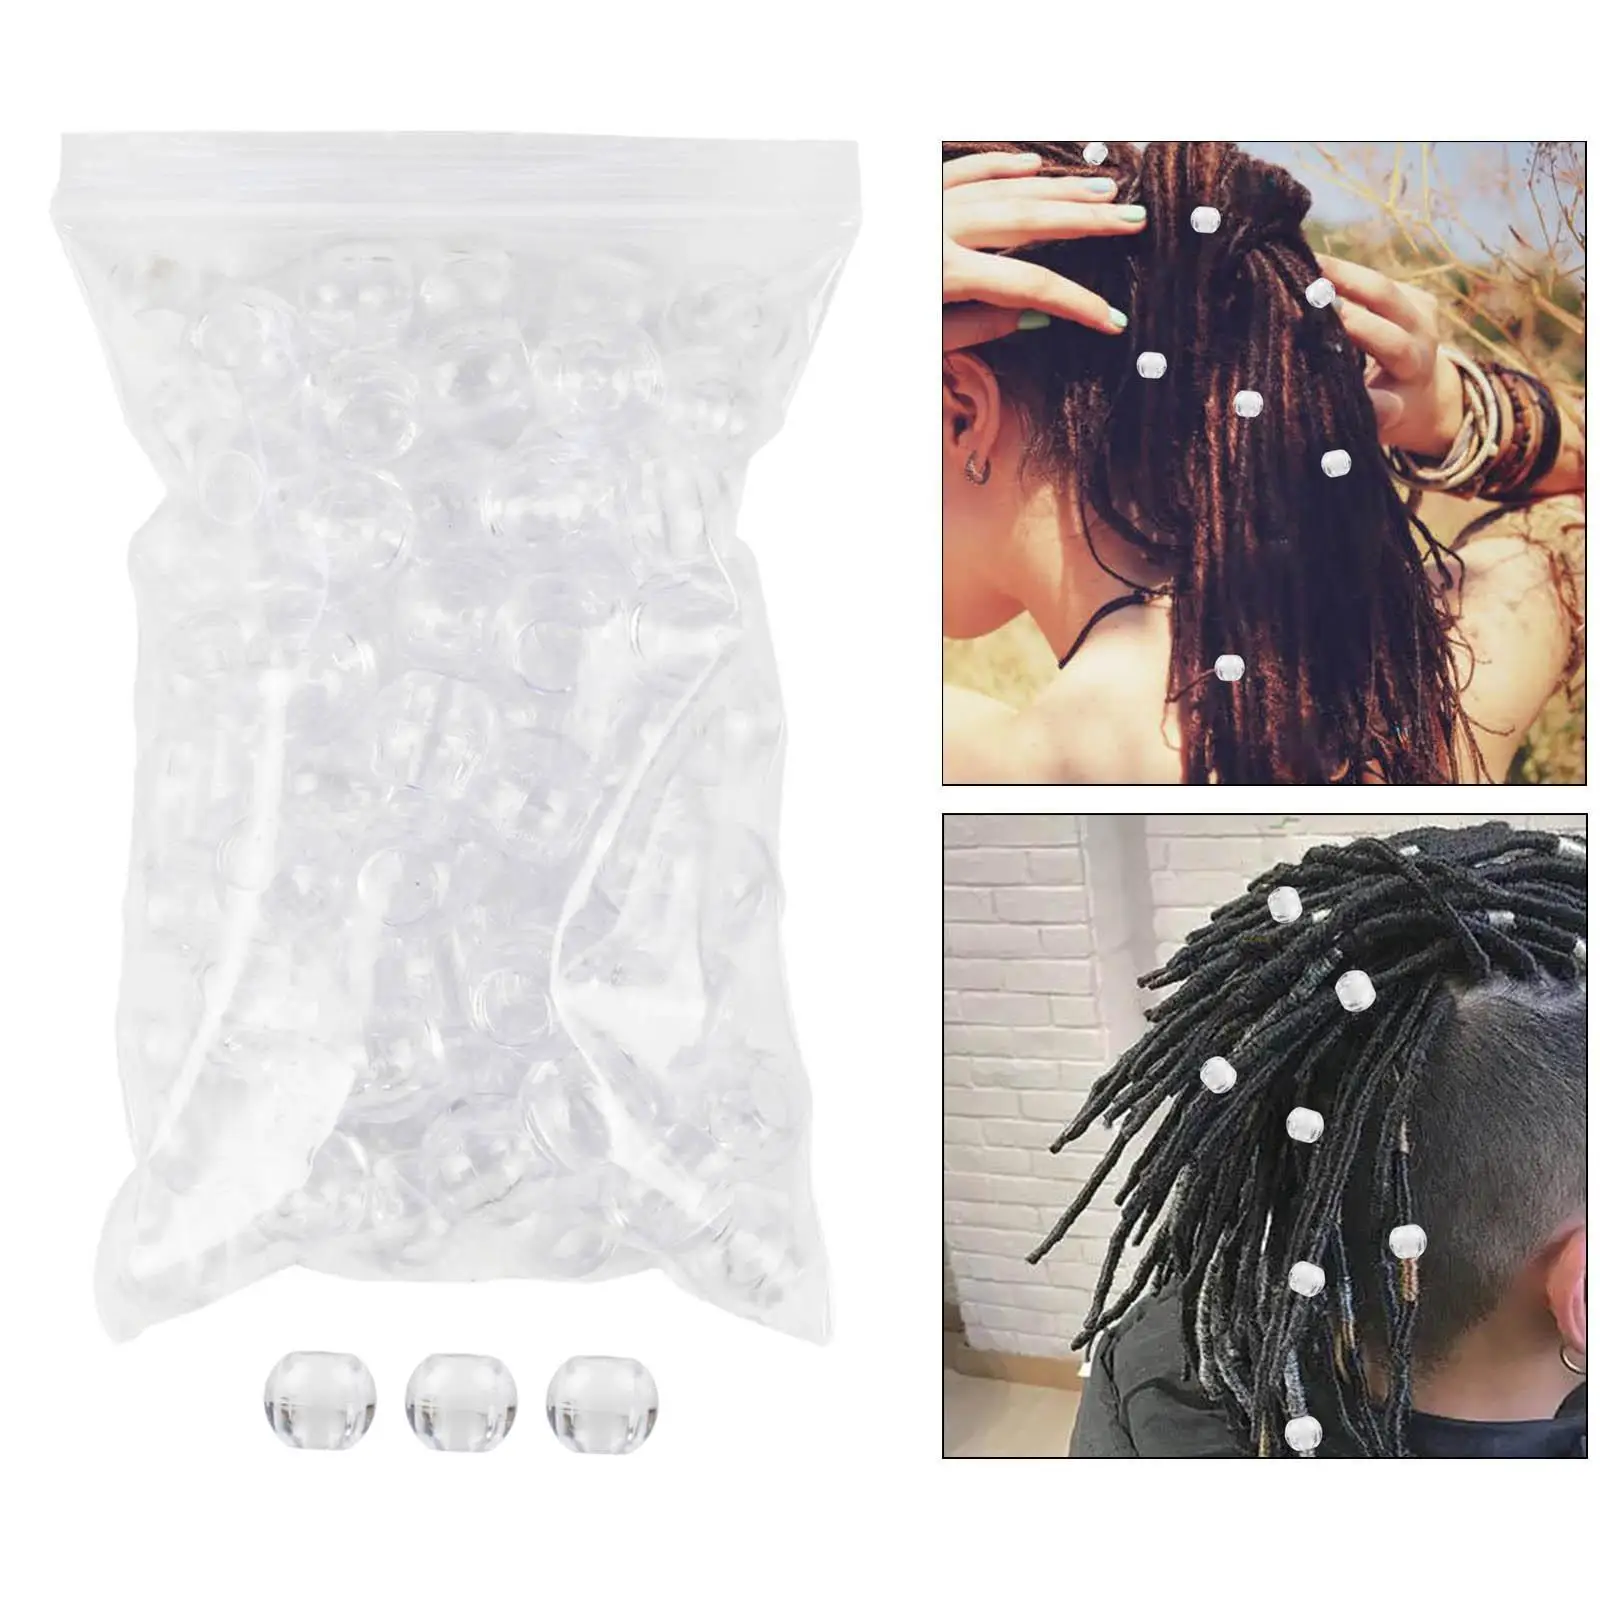 100x Dreadlock Beads 16mm Dia, Big Hole Hair Extension Beads for Dreadlock Wig Salon